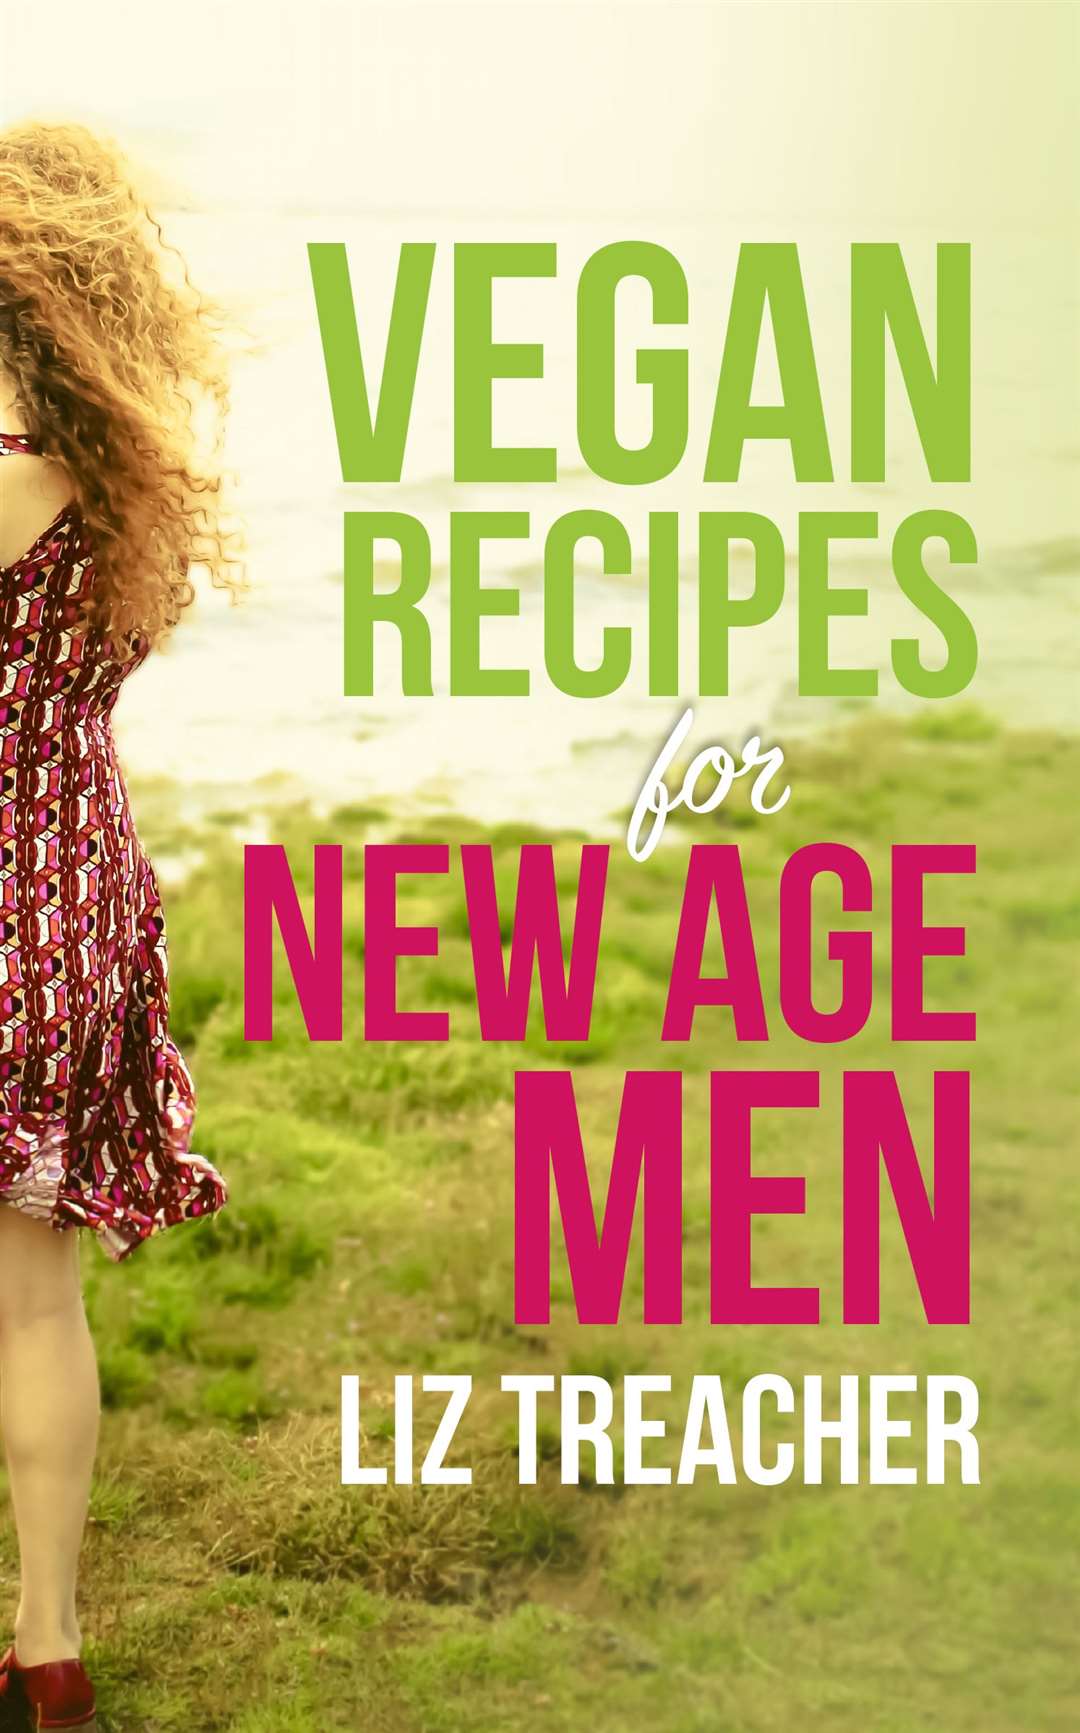 Vegan Recipes For New Age Men by Liz Treacher.